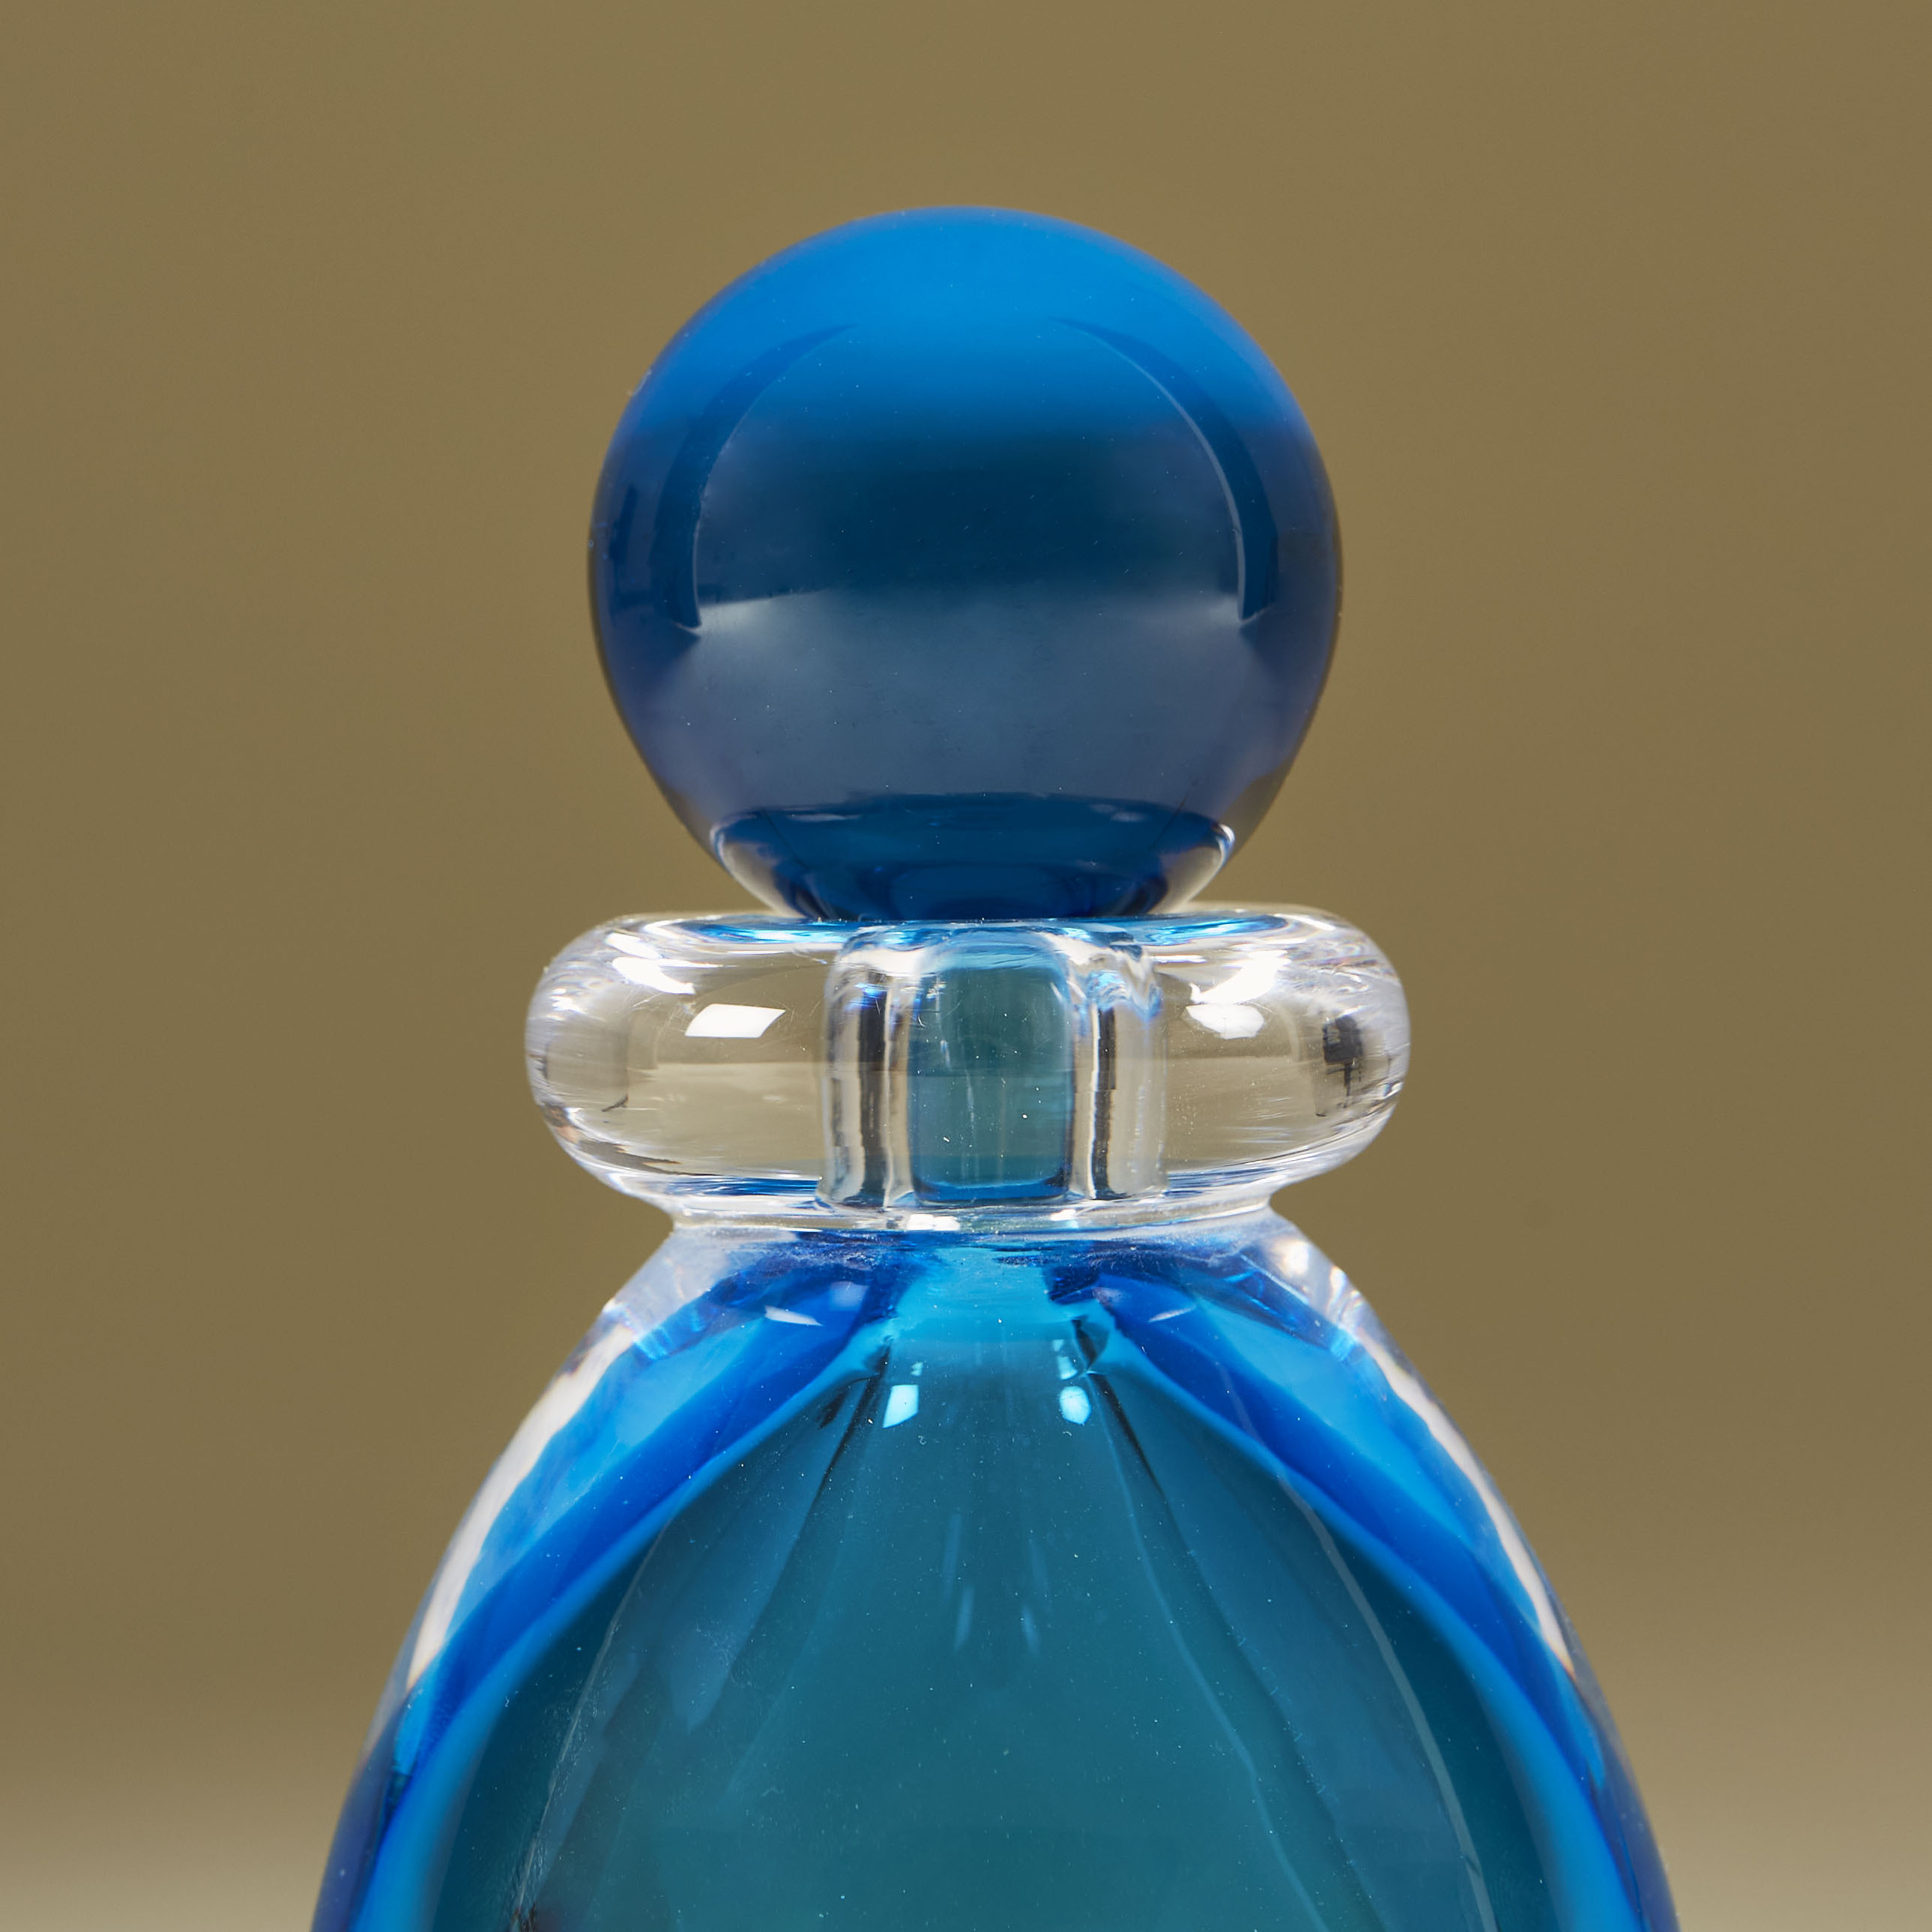 Aqua Marine Tall Perfume Bottle 202 V1